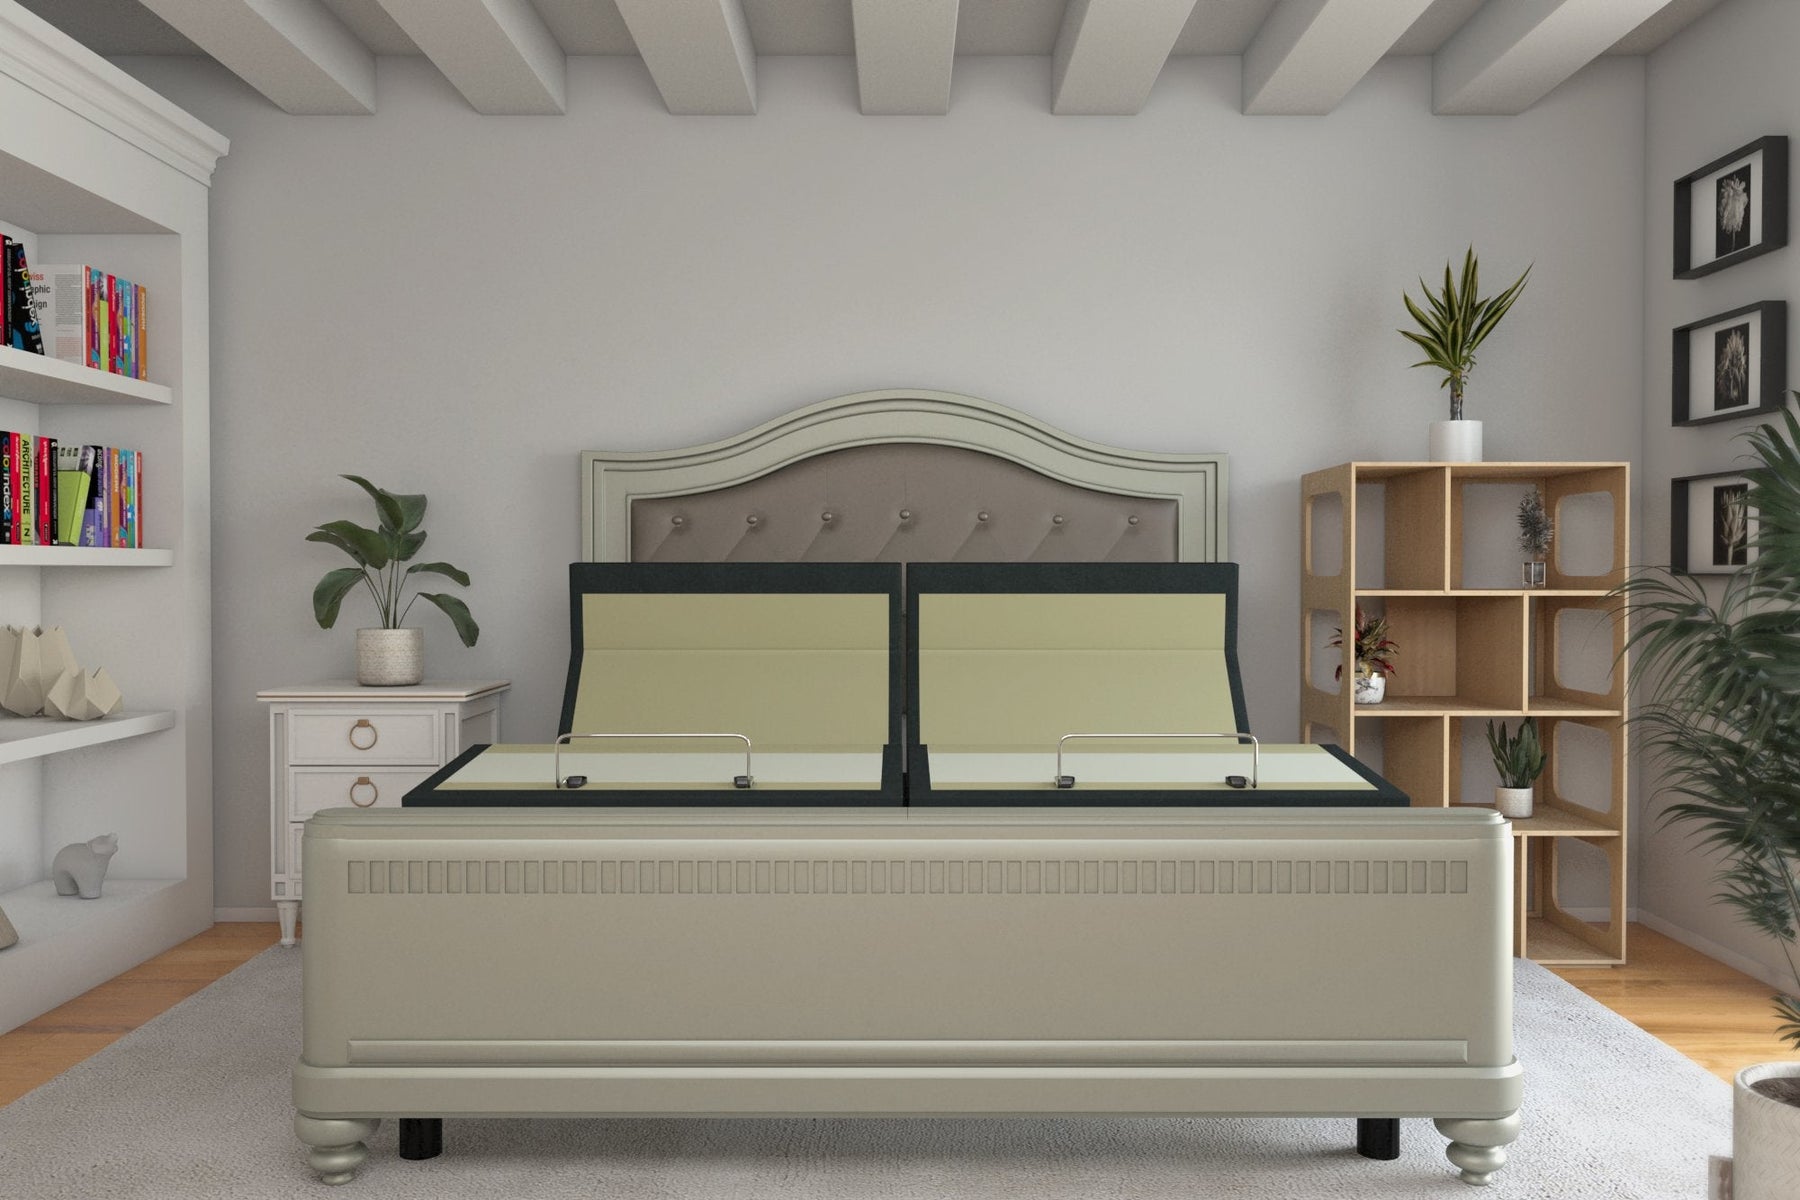 How RV Beds Maximize Comfort